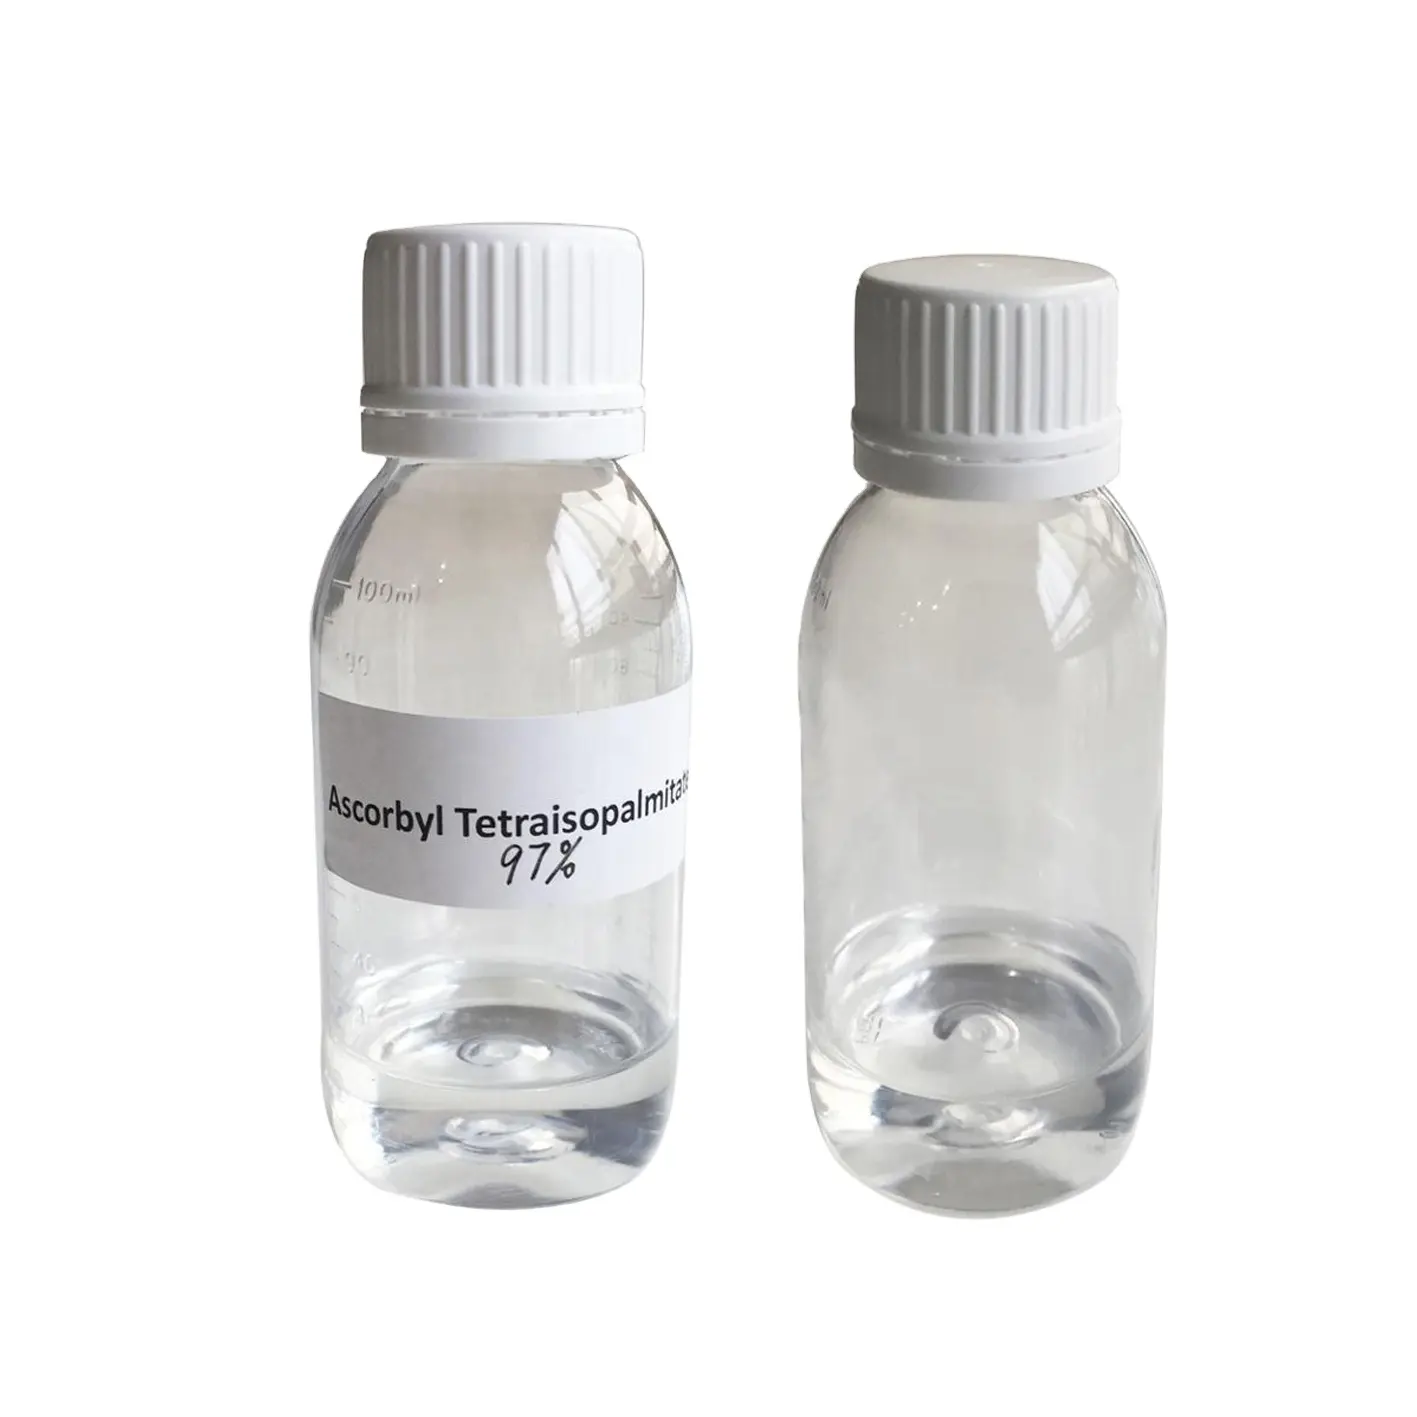 Kosmetischer Inhaltsstoff Tetra hexyldecyl as corbat/Ascorbyl tetra isopalmitat 97%